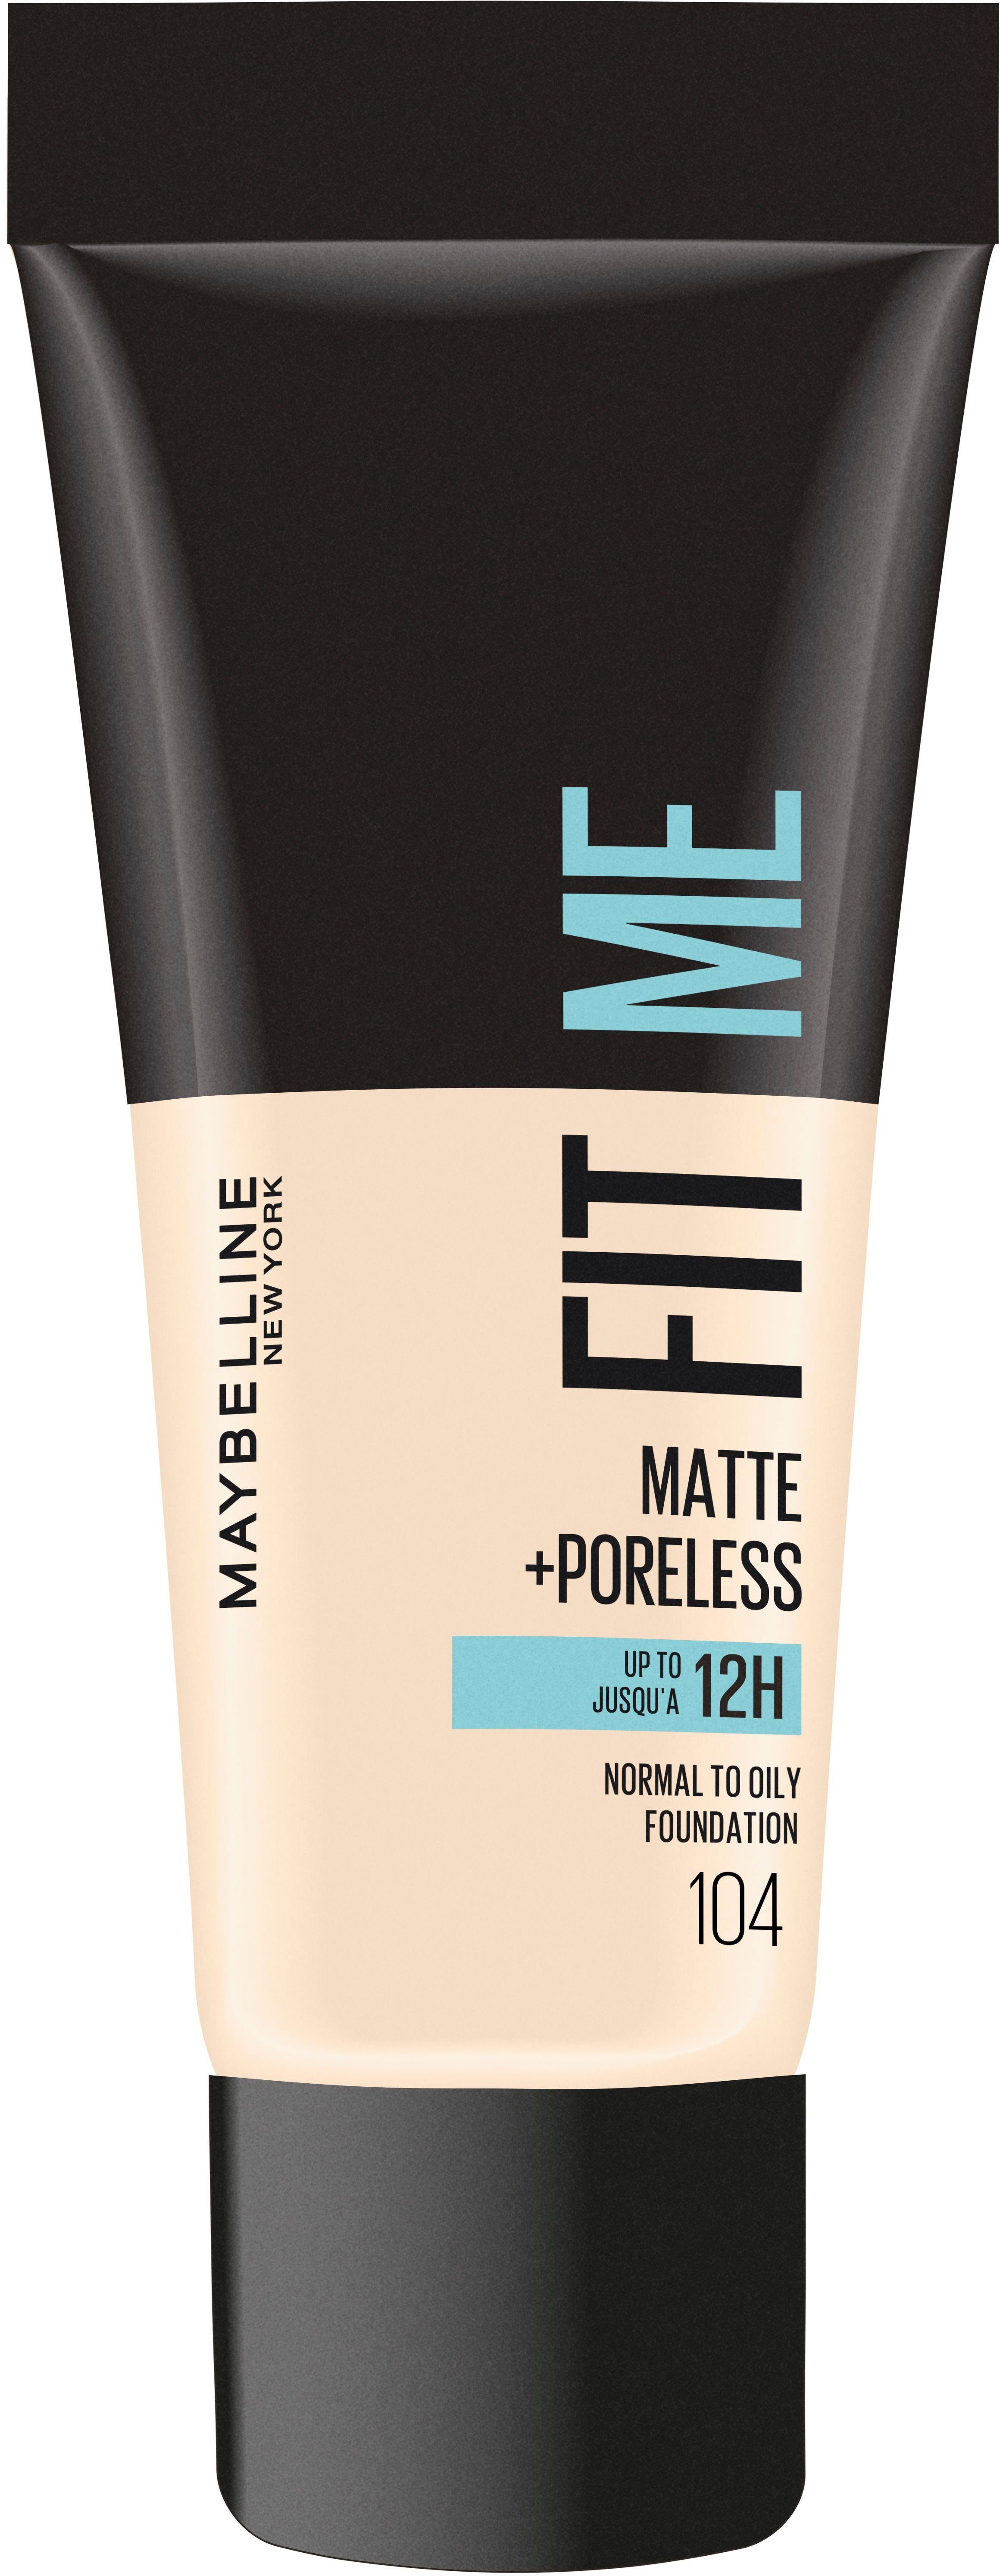 Fit Make-Up + Poreless Matte Maybelline Me! YORK York NEW MAYBELLINE New Foundation